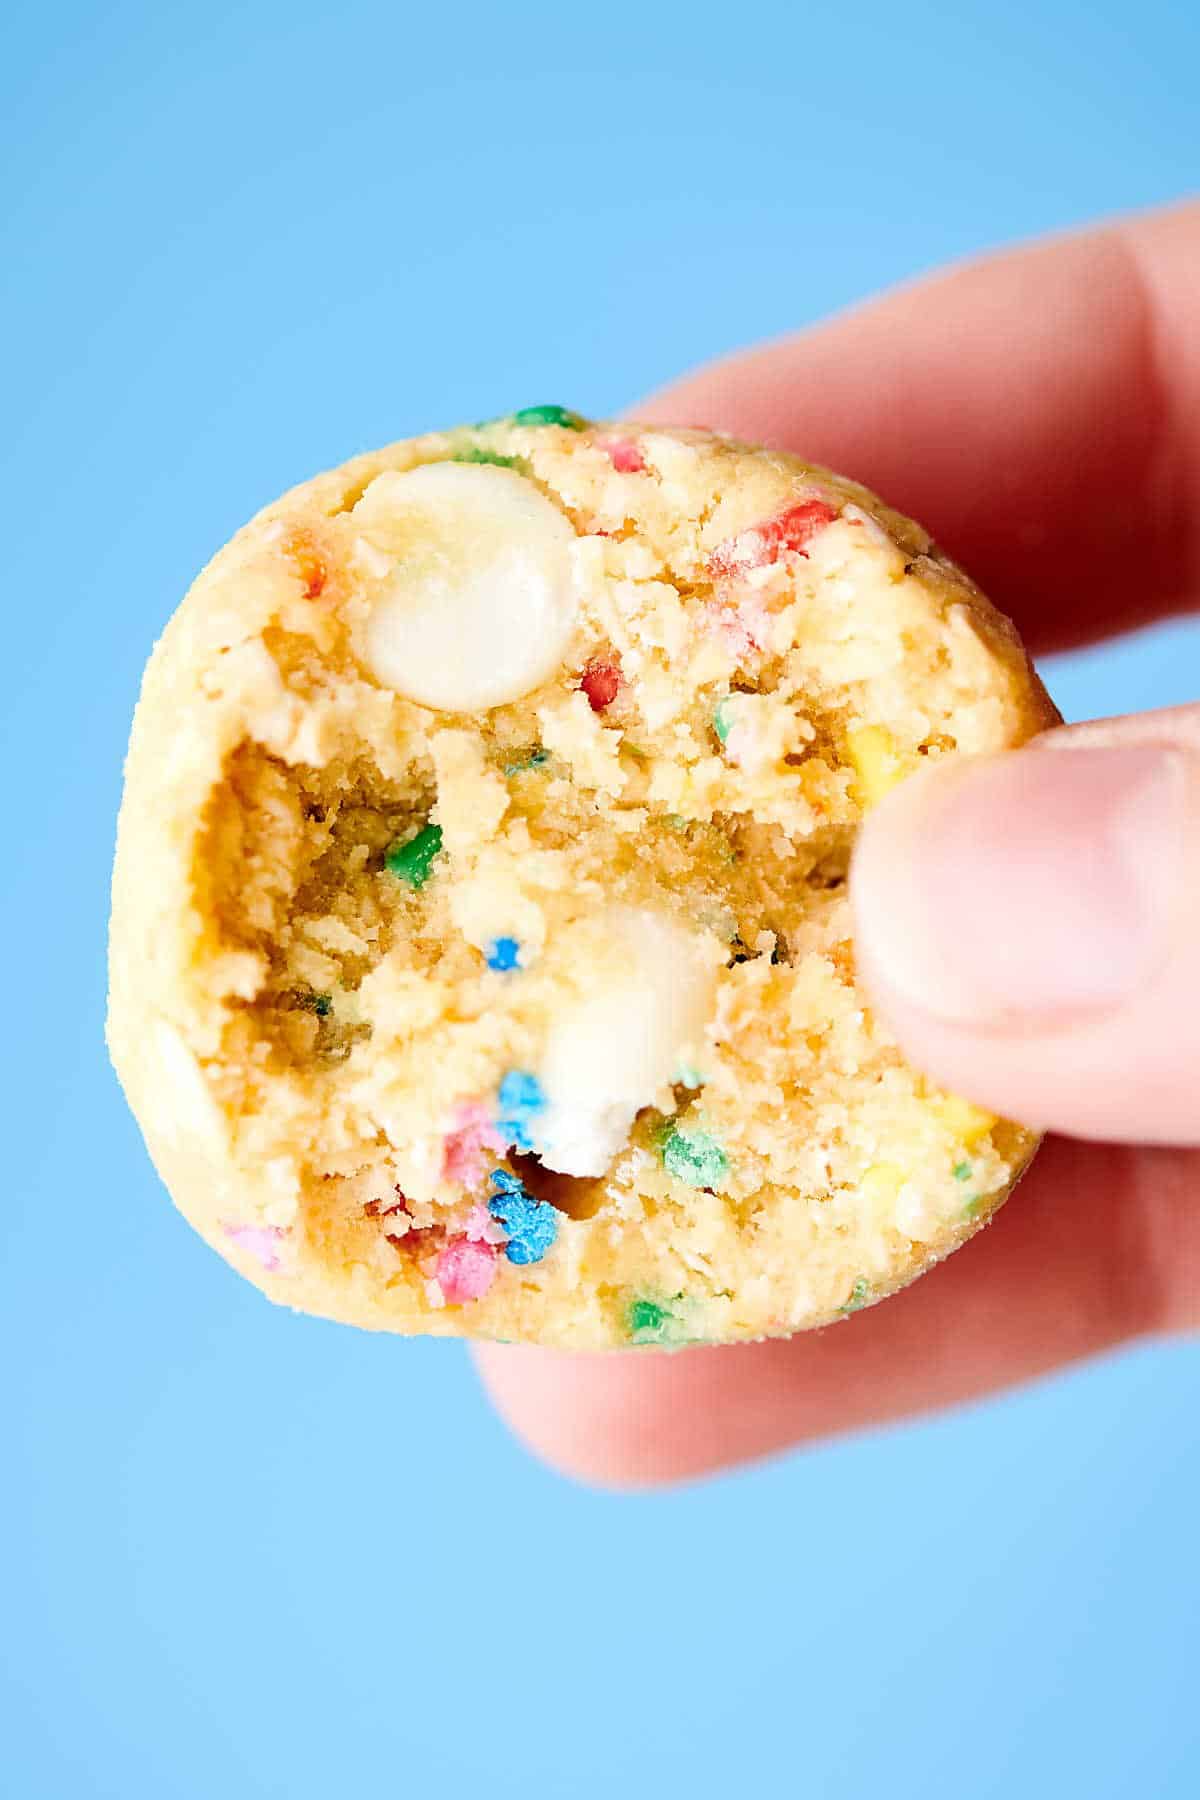 Funfetti Edible Cookie Dough Recipe - Can Be Eaten Raw! Gluten Free.